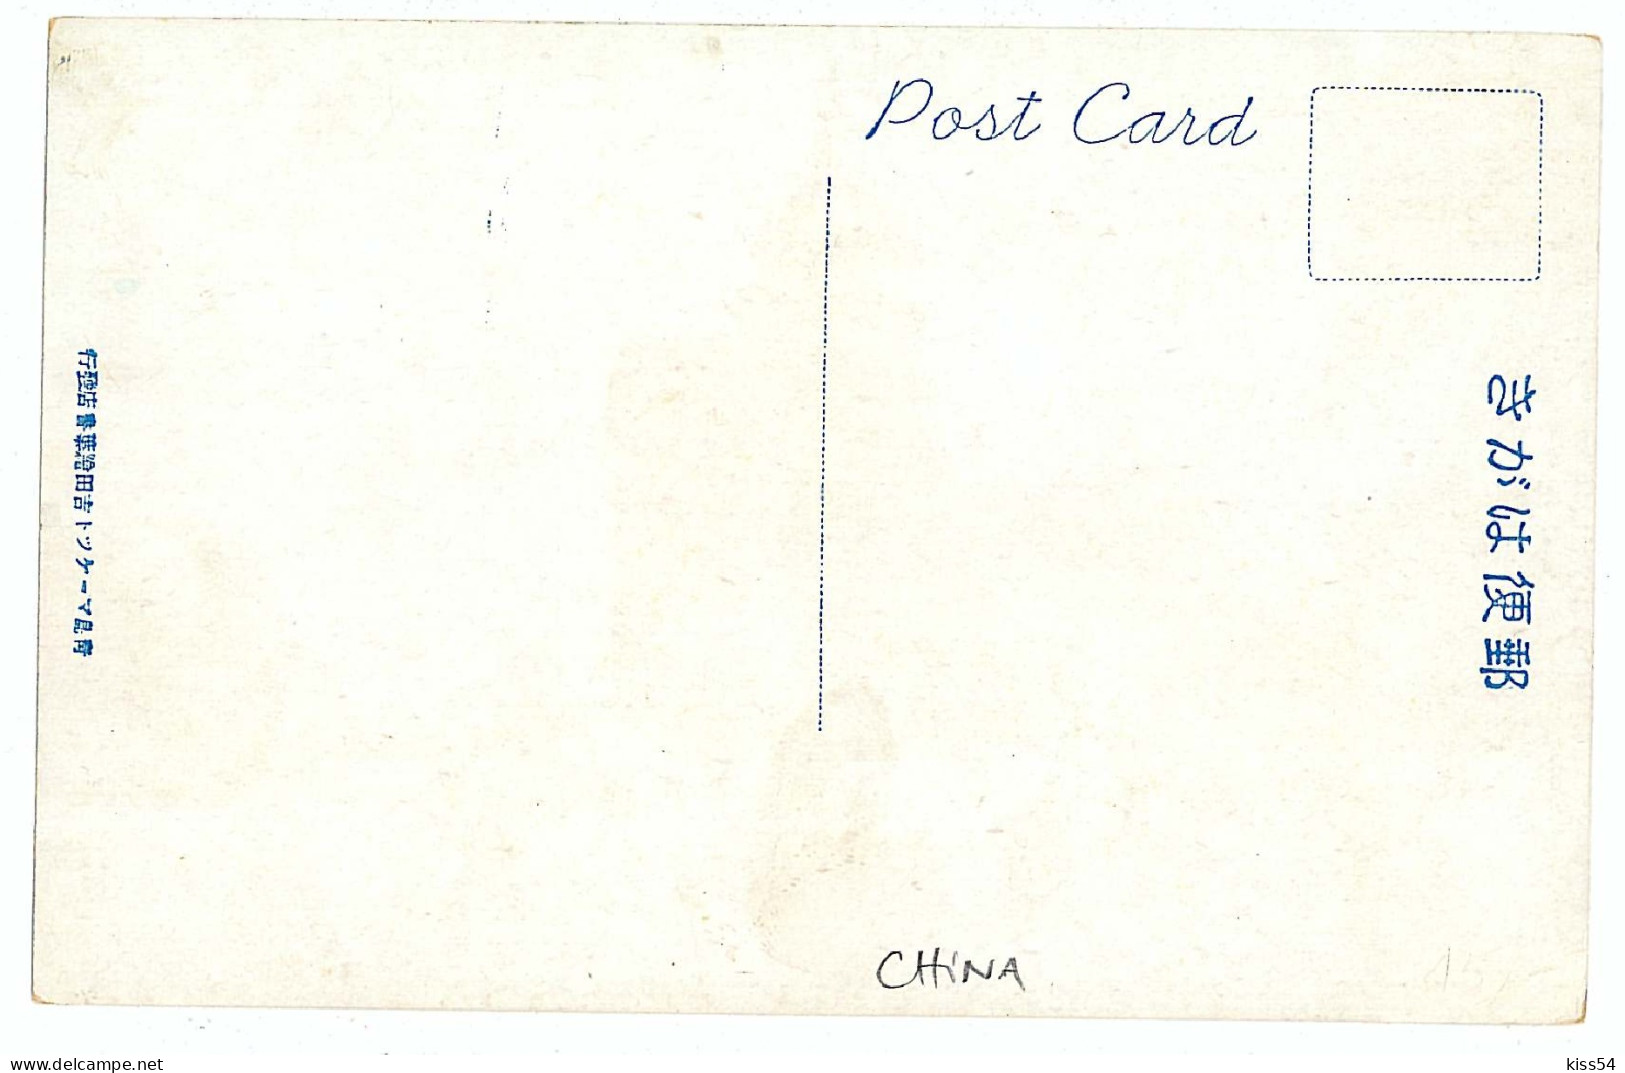 CH 19 - 7648 TINGTAU, China, Street Santo-ro & Sainan-ro - Old Pdstcard - Unused - China